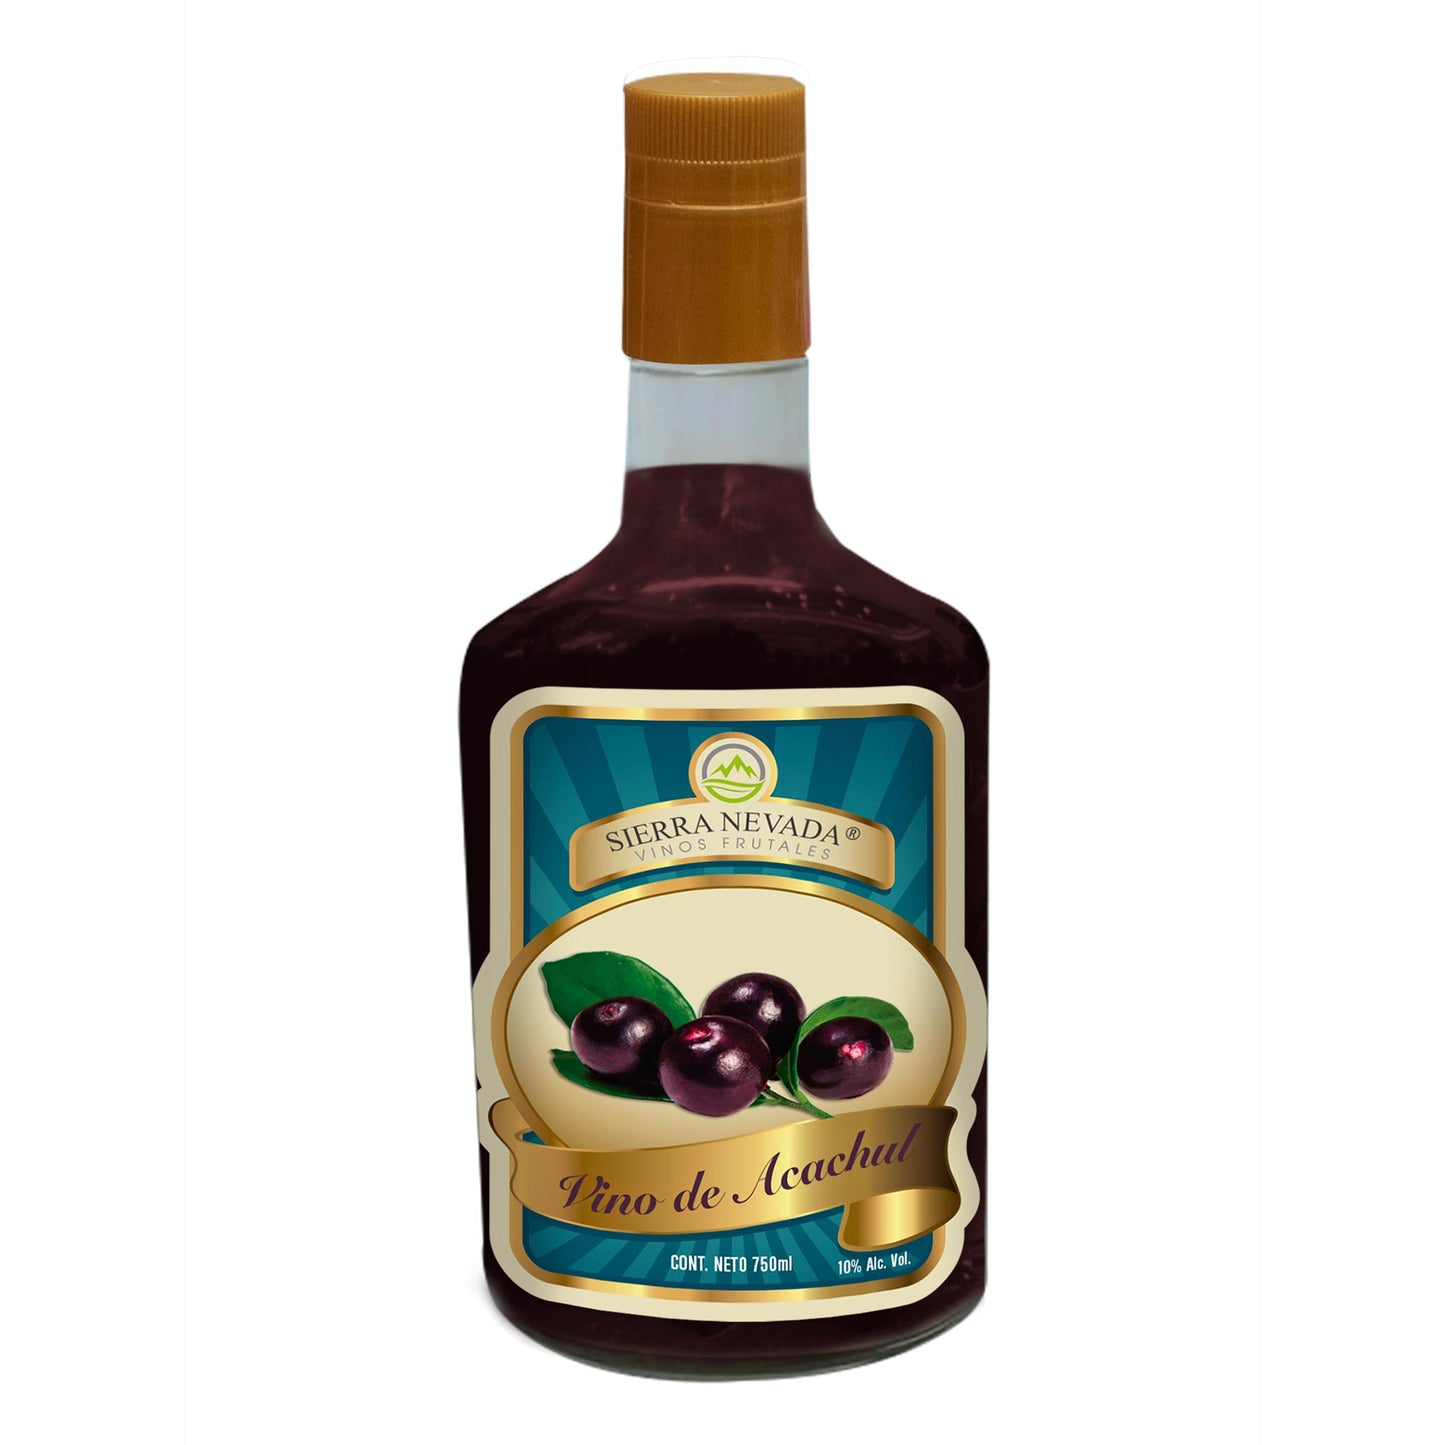 SIERRA NEVADA ® Bebida de frutos silvestres de acachul 750ml